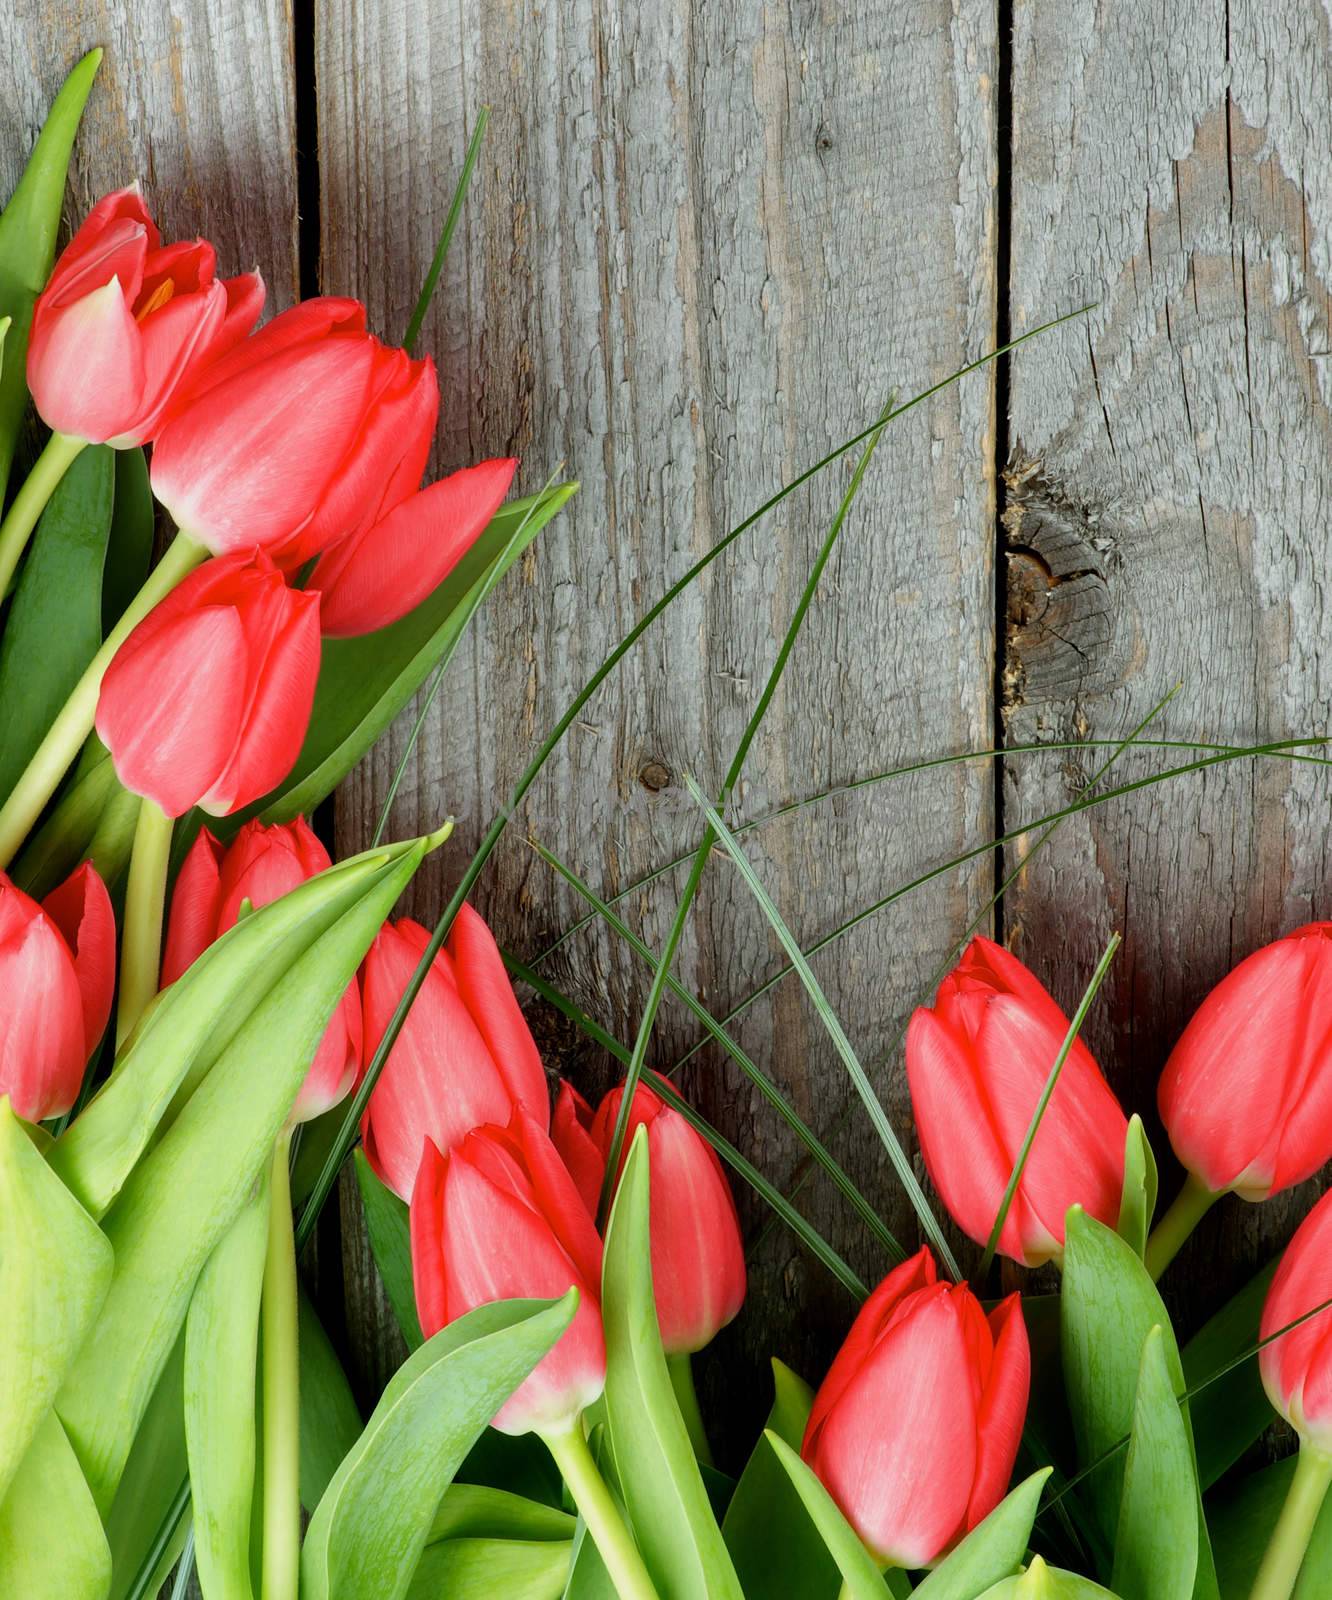 Red Spring Tulips by zhekos